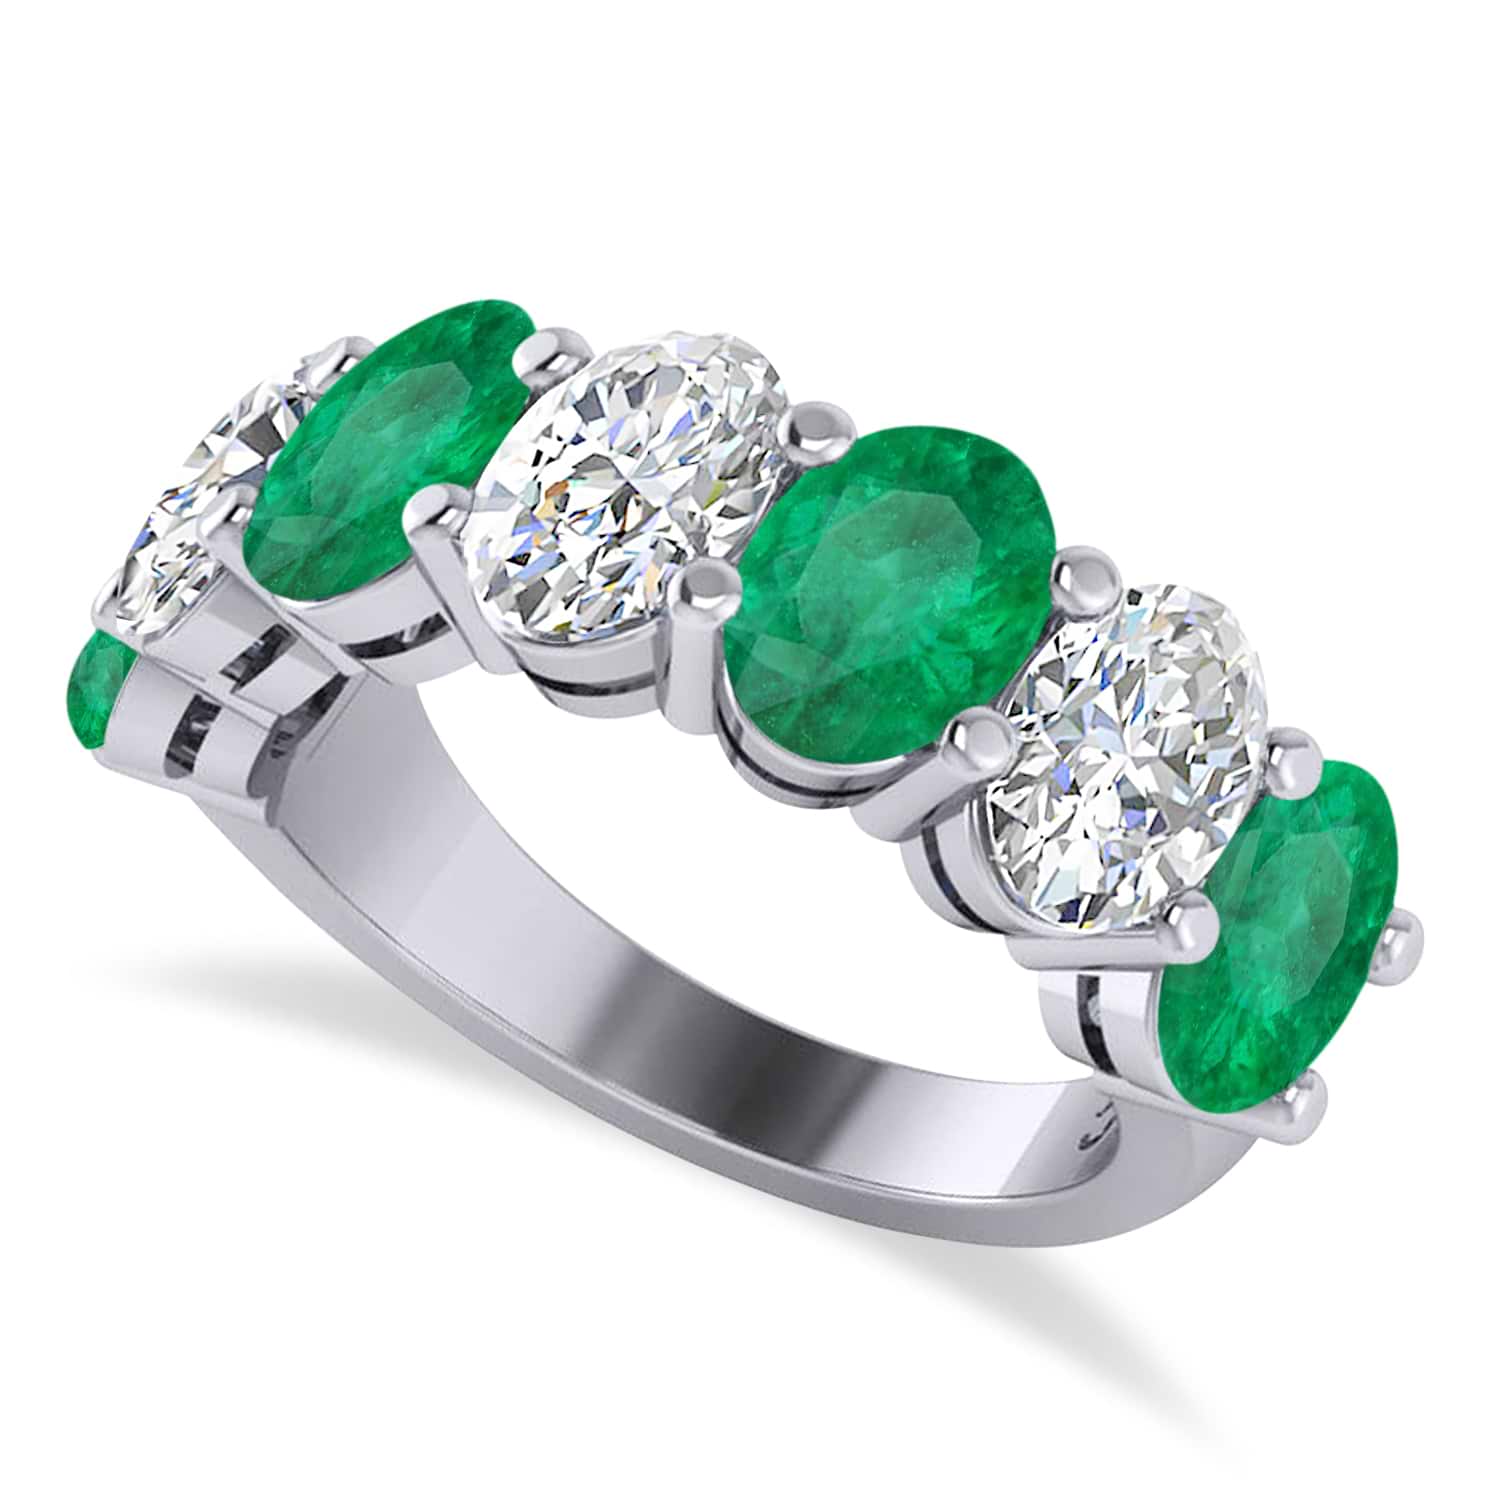 Oval Diamond & Emerald Seven Stone Ring 14k White Gold (6.40ct)